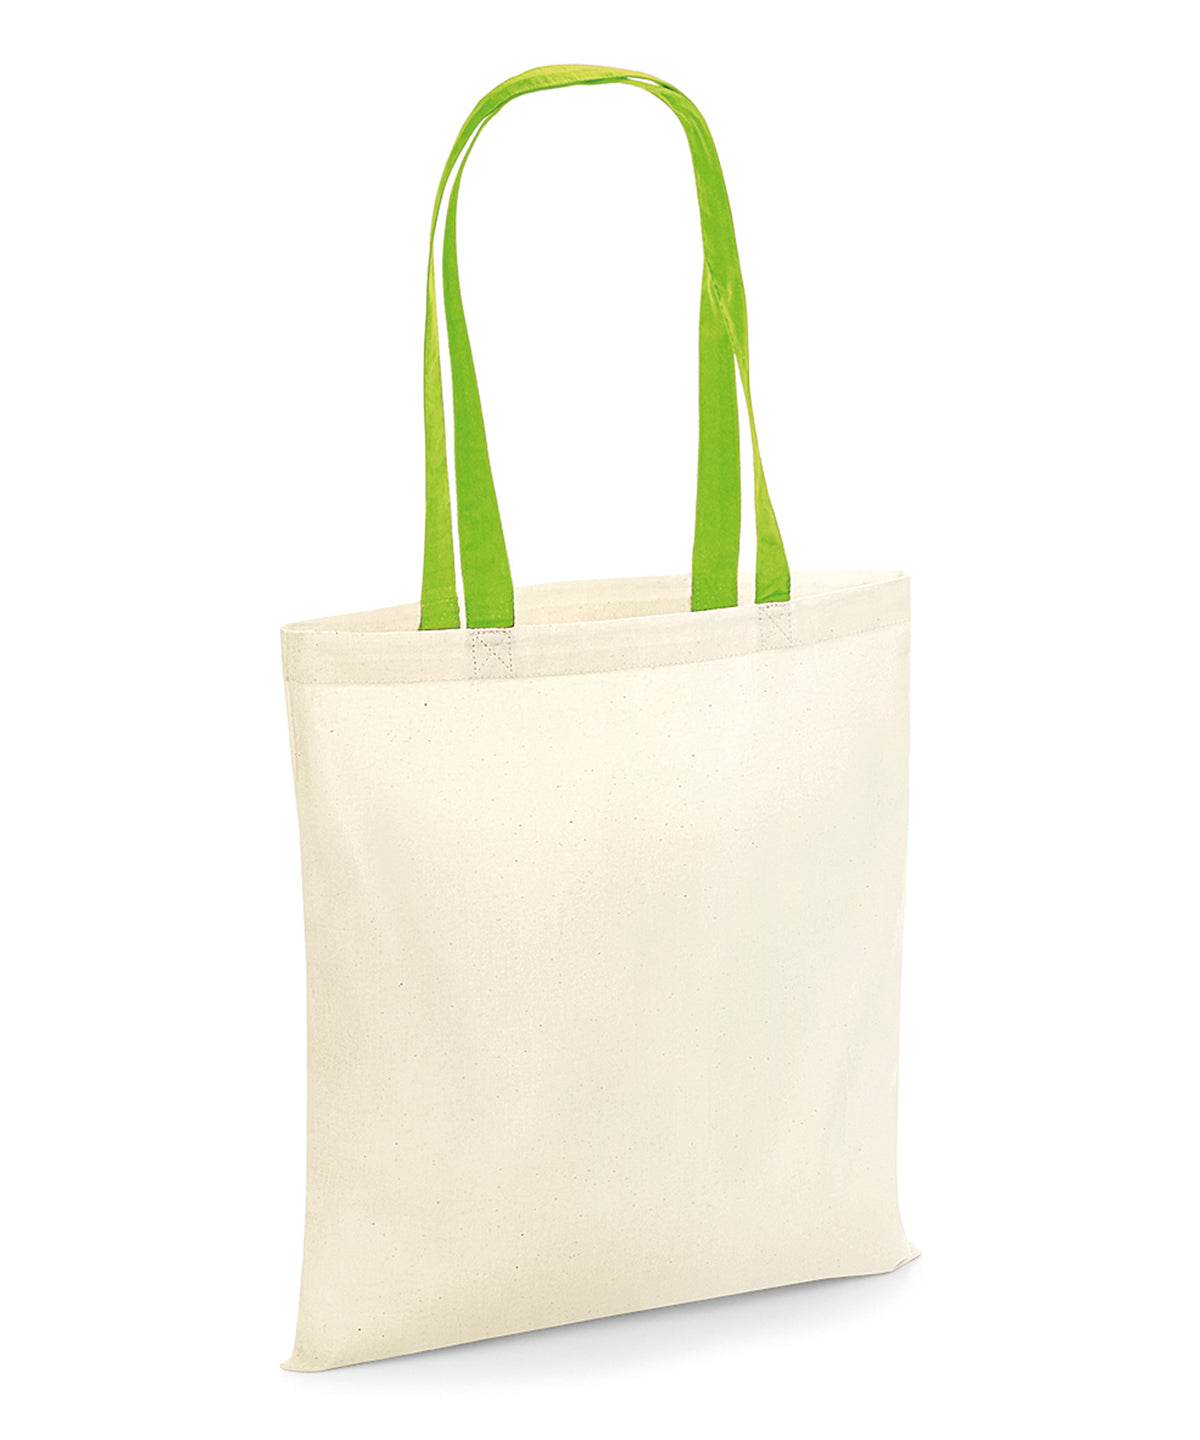 Töskur - Bag For Life - Contrast Handles